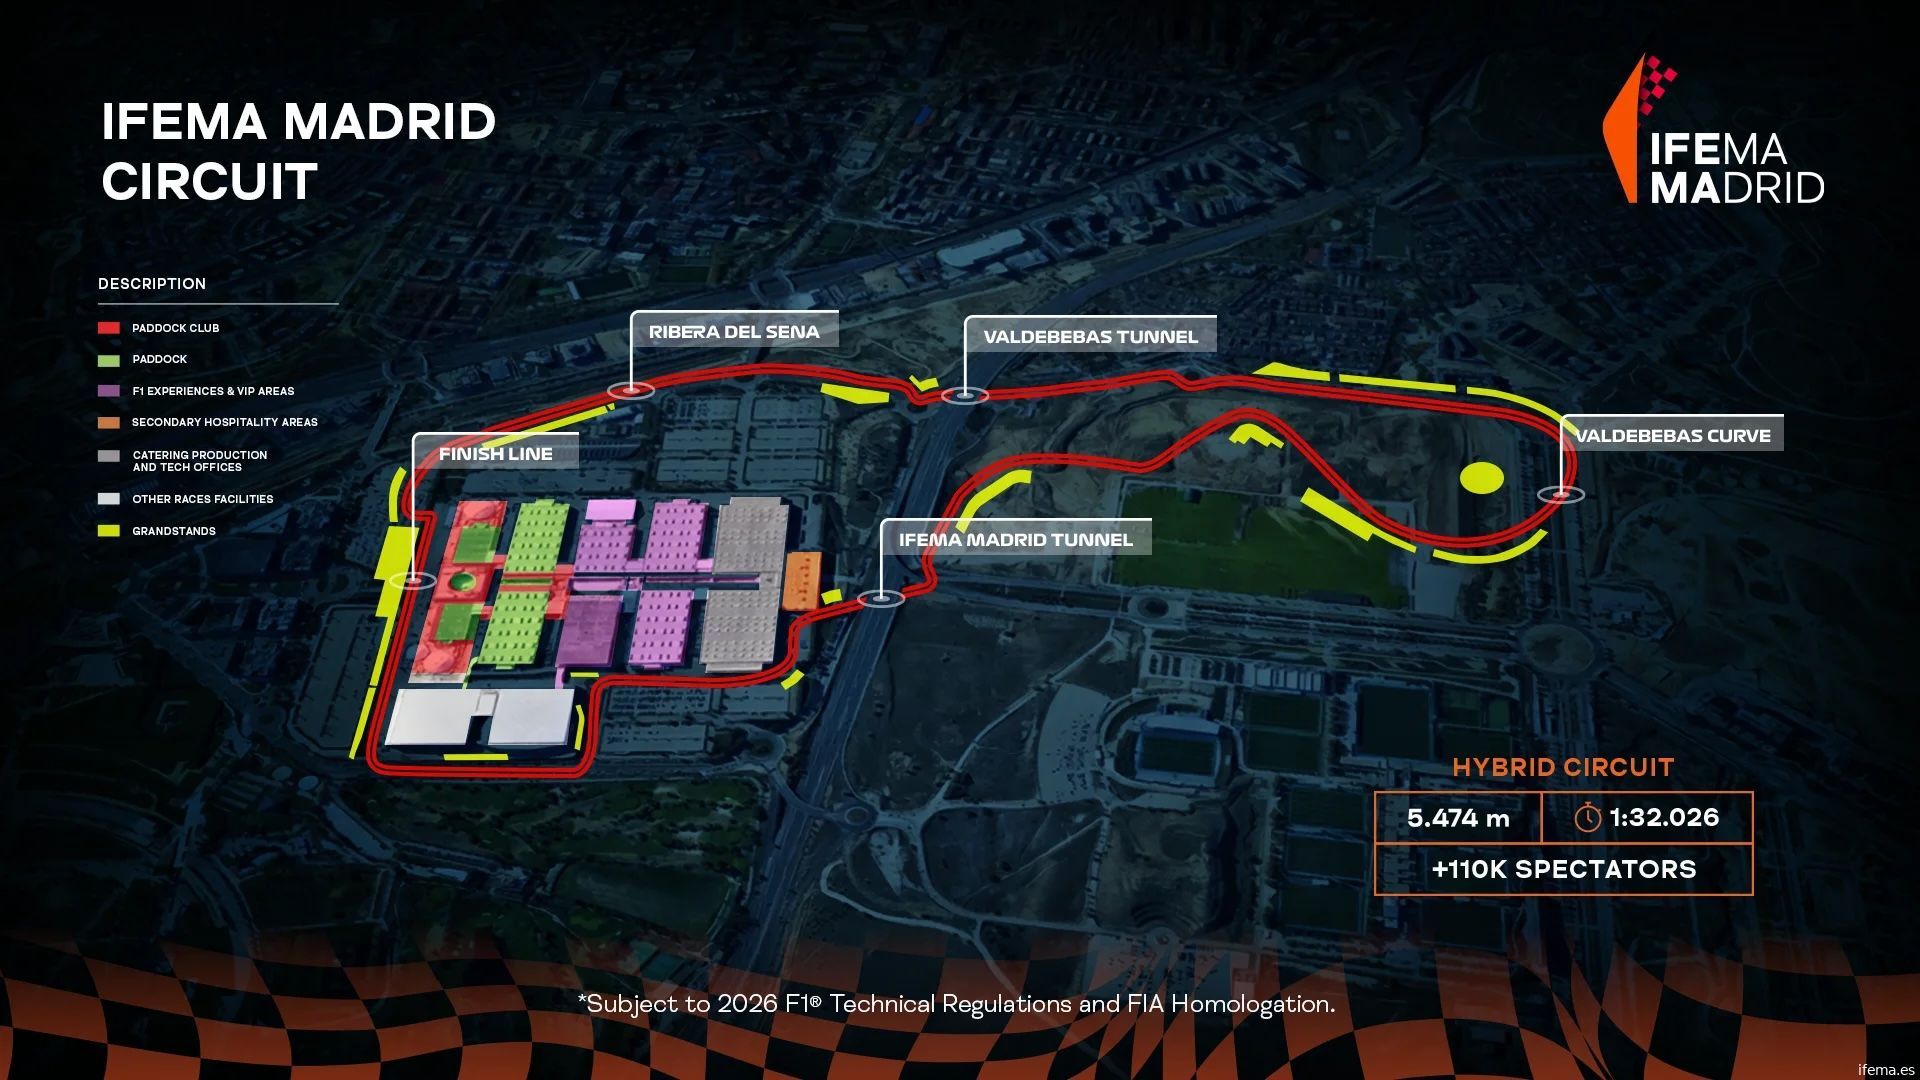 Layout Of Madrid Circuit Shared On IFEMA Website